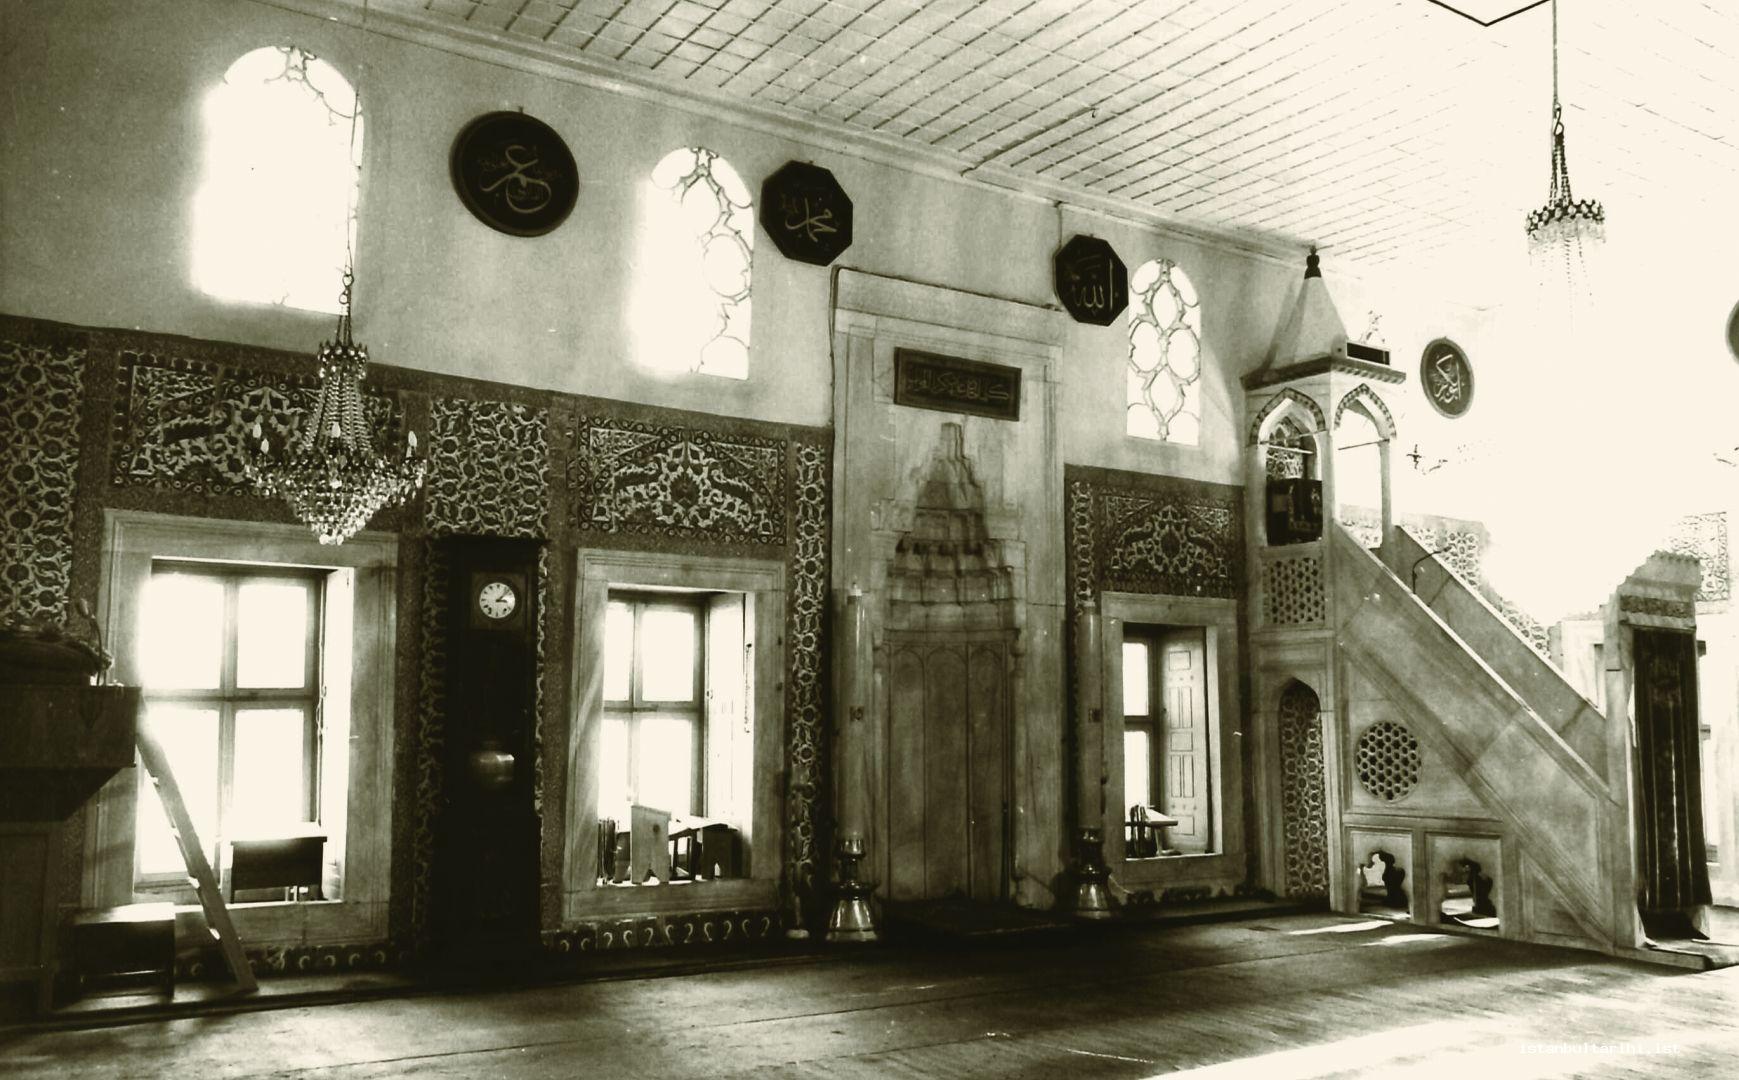 11- The plan of Tahir Ağa Sufi Lodge (M. Baha Tanman, 1982)